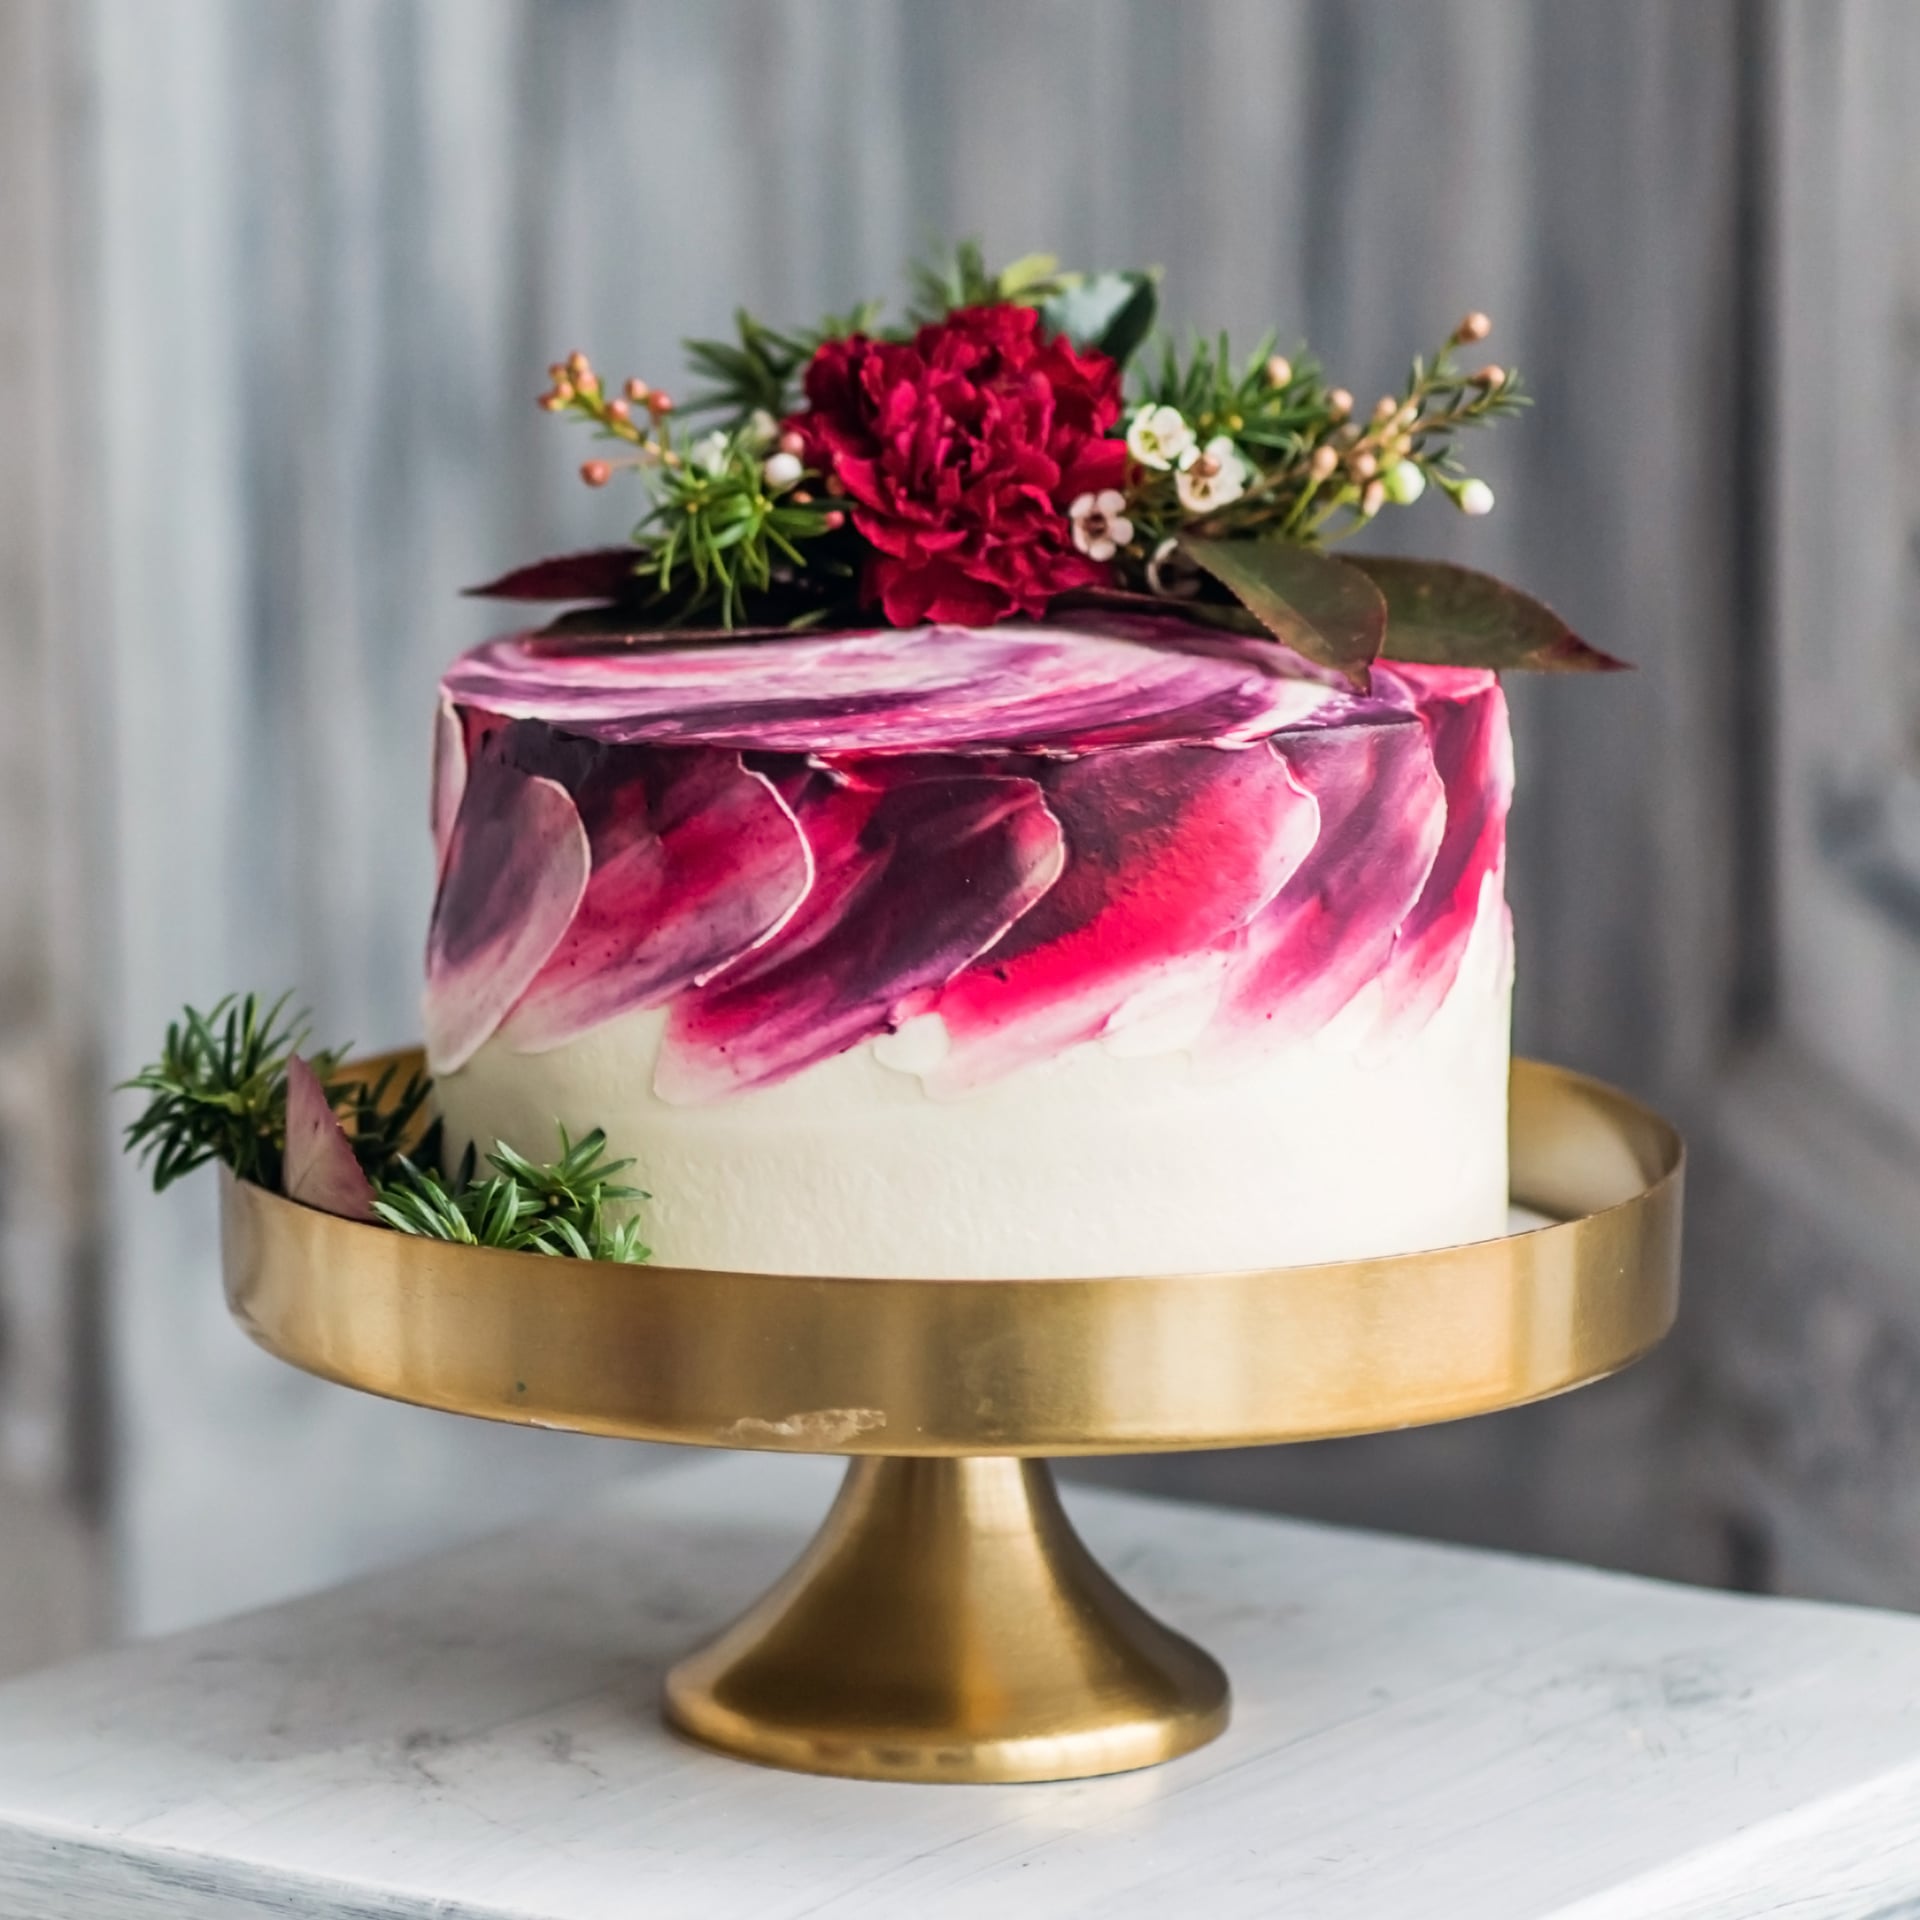 Flower-decorated cake